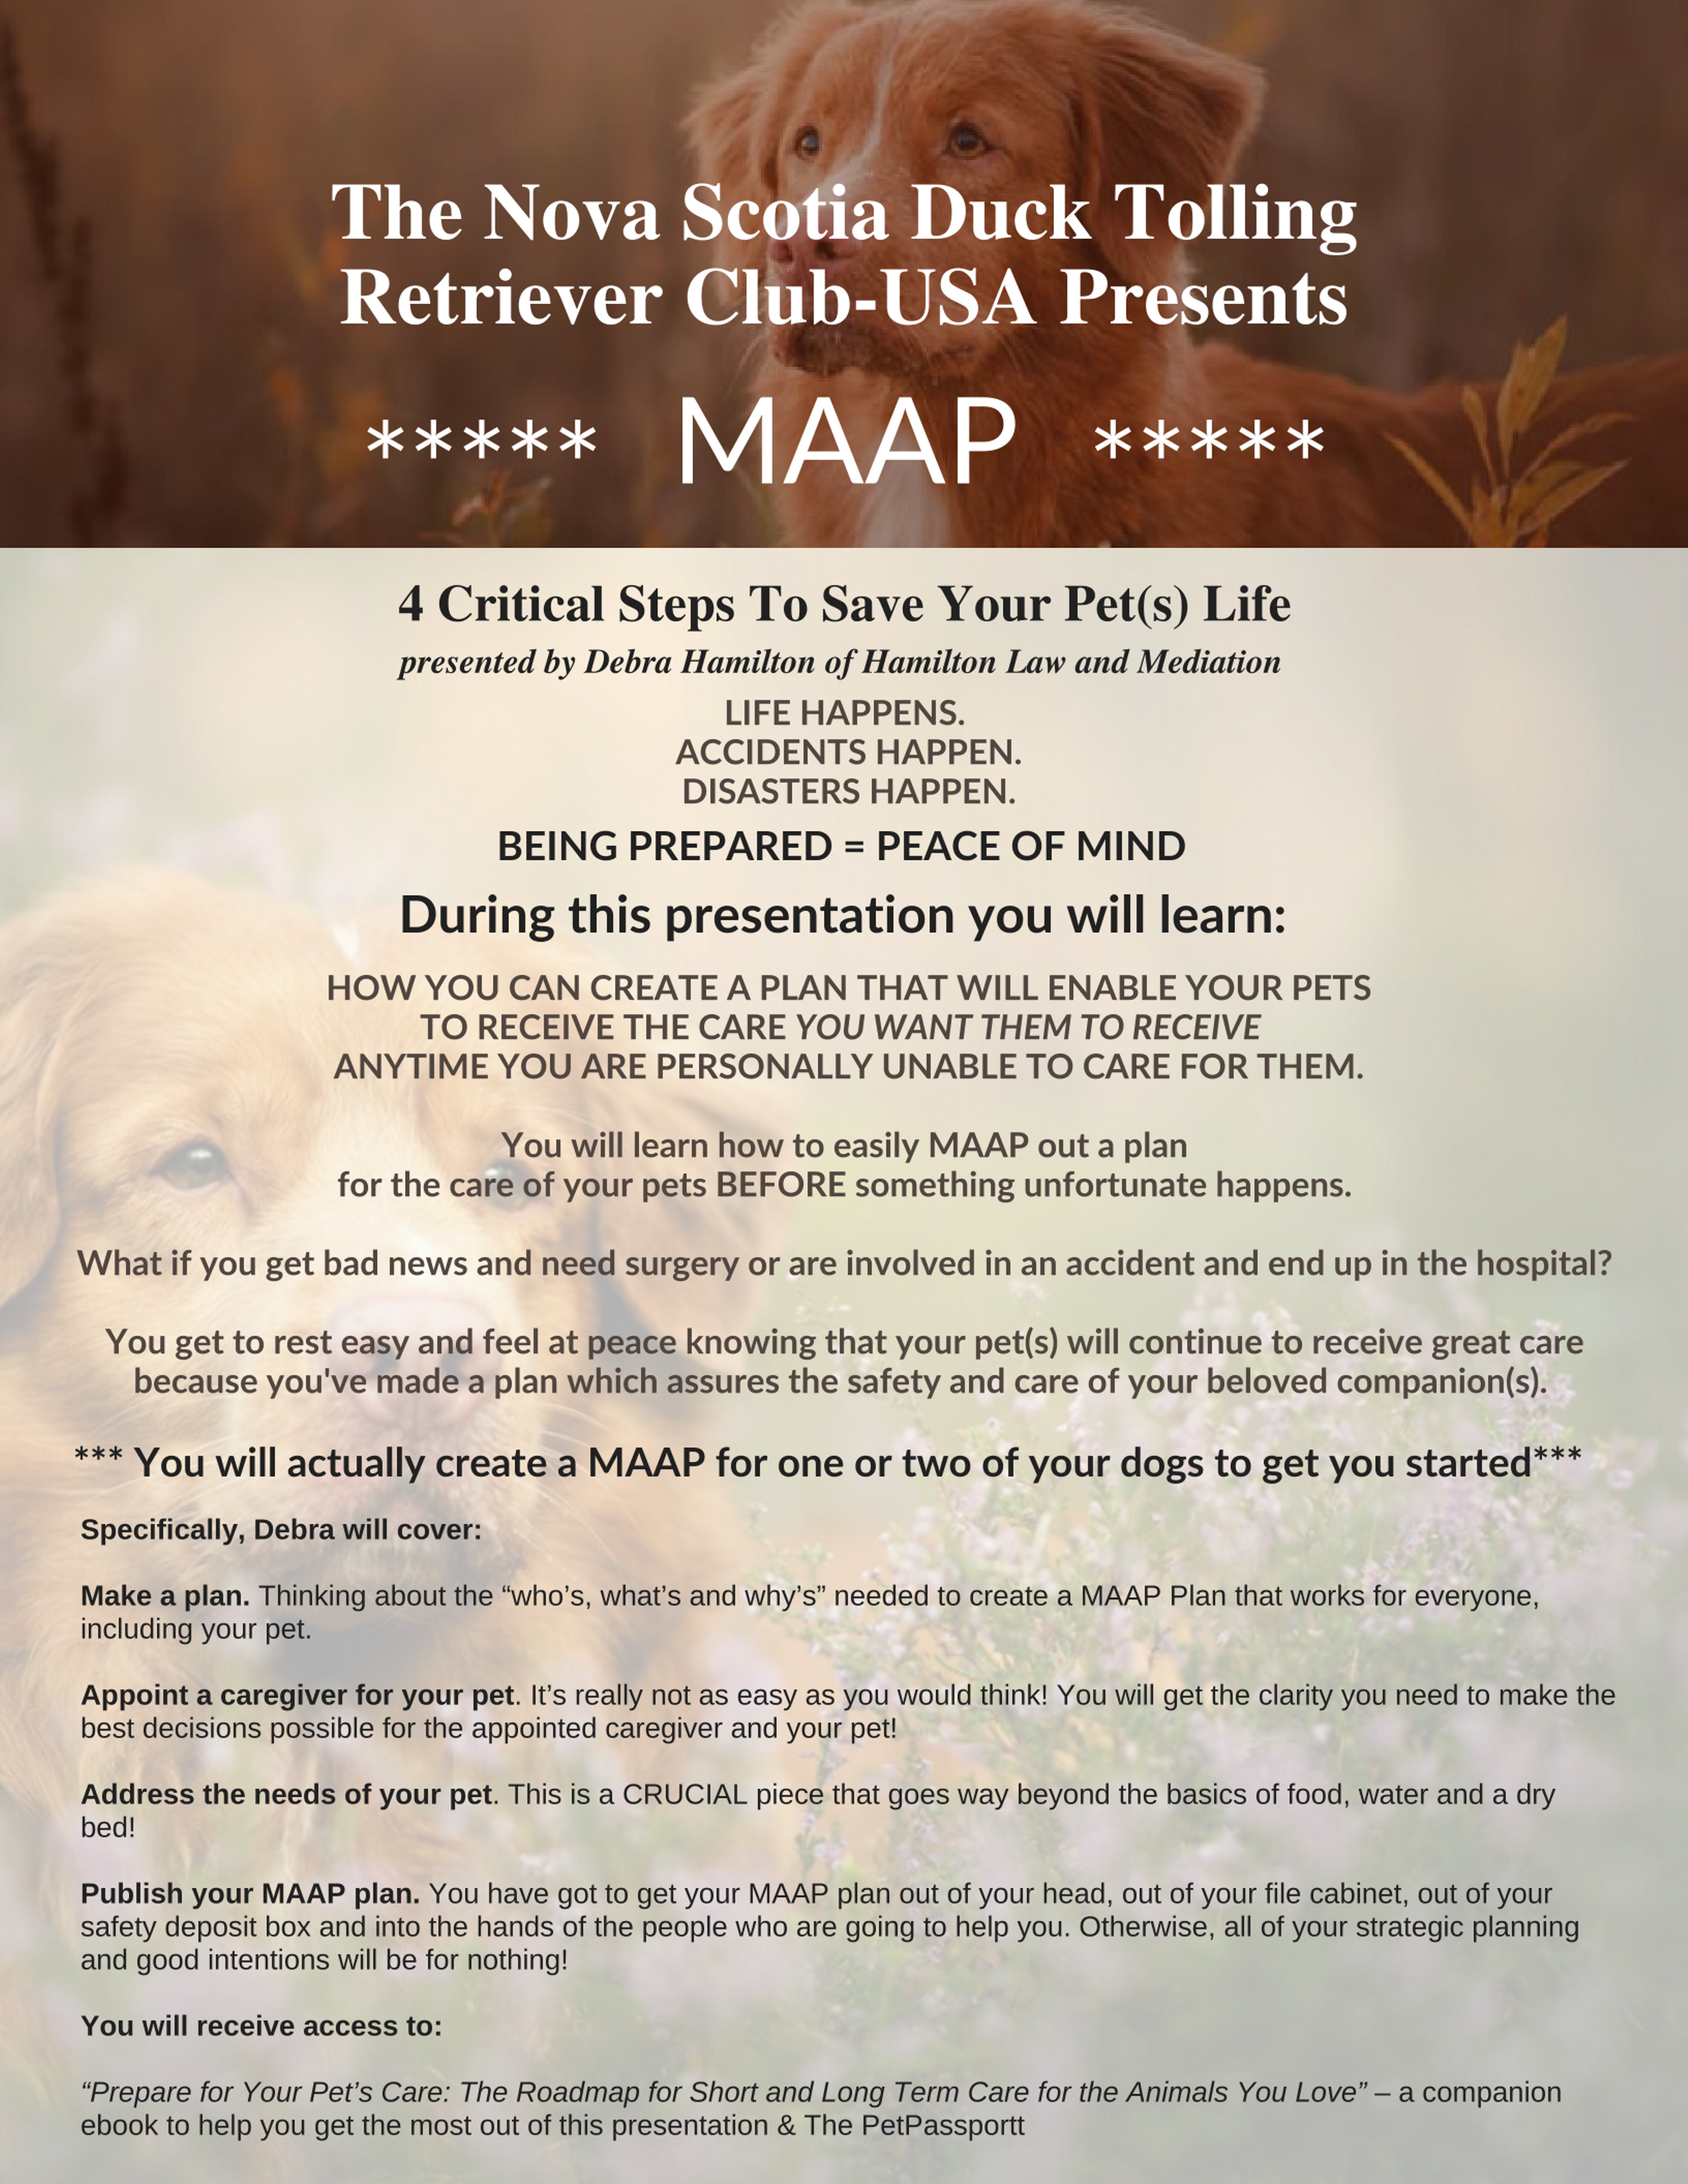 Nova Scotia Duck Tolling Retriever Club USA, MAAP, 4 Critical Steps To Save Your Pets Life, Debra Vey Voda Hamilton, Pet Care Planning, HamiltonLawAndMediation.com